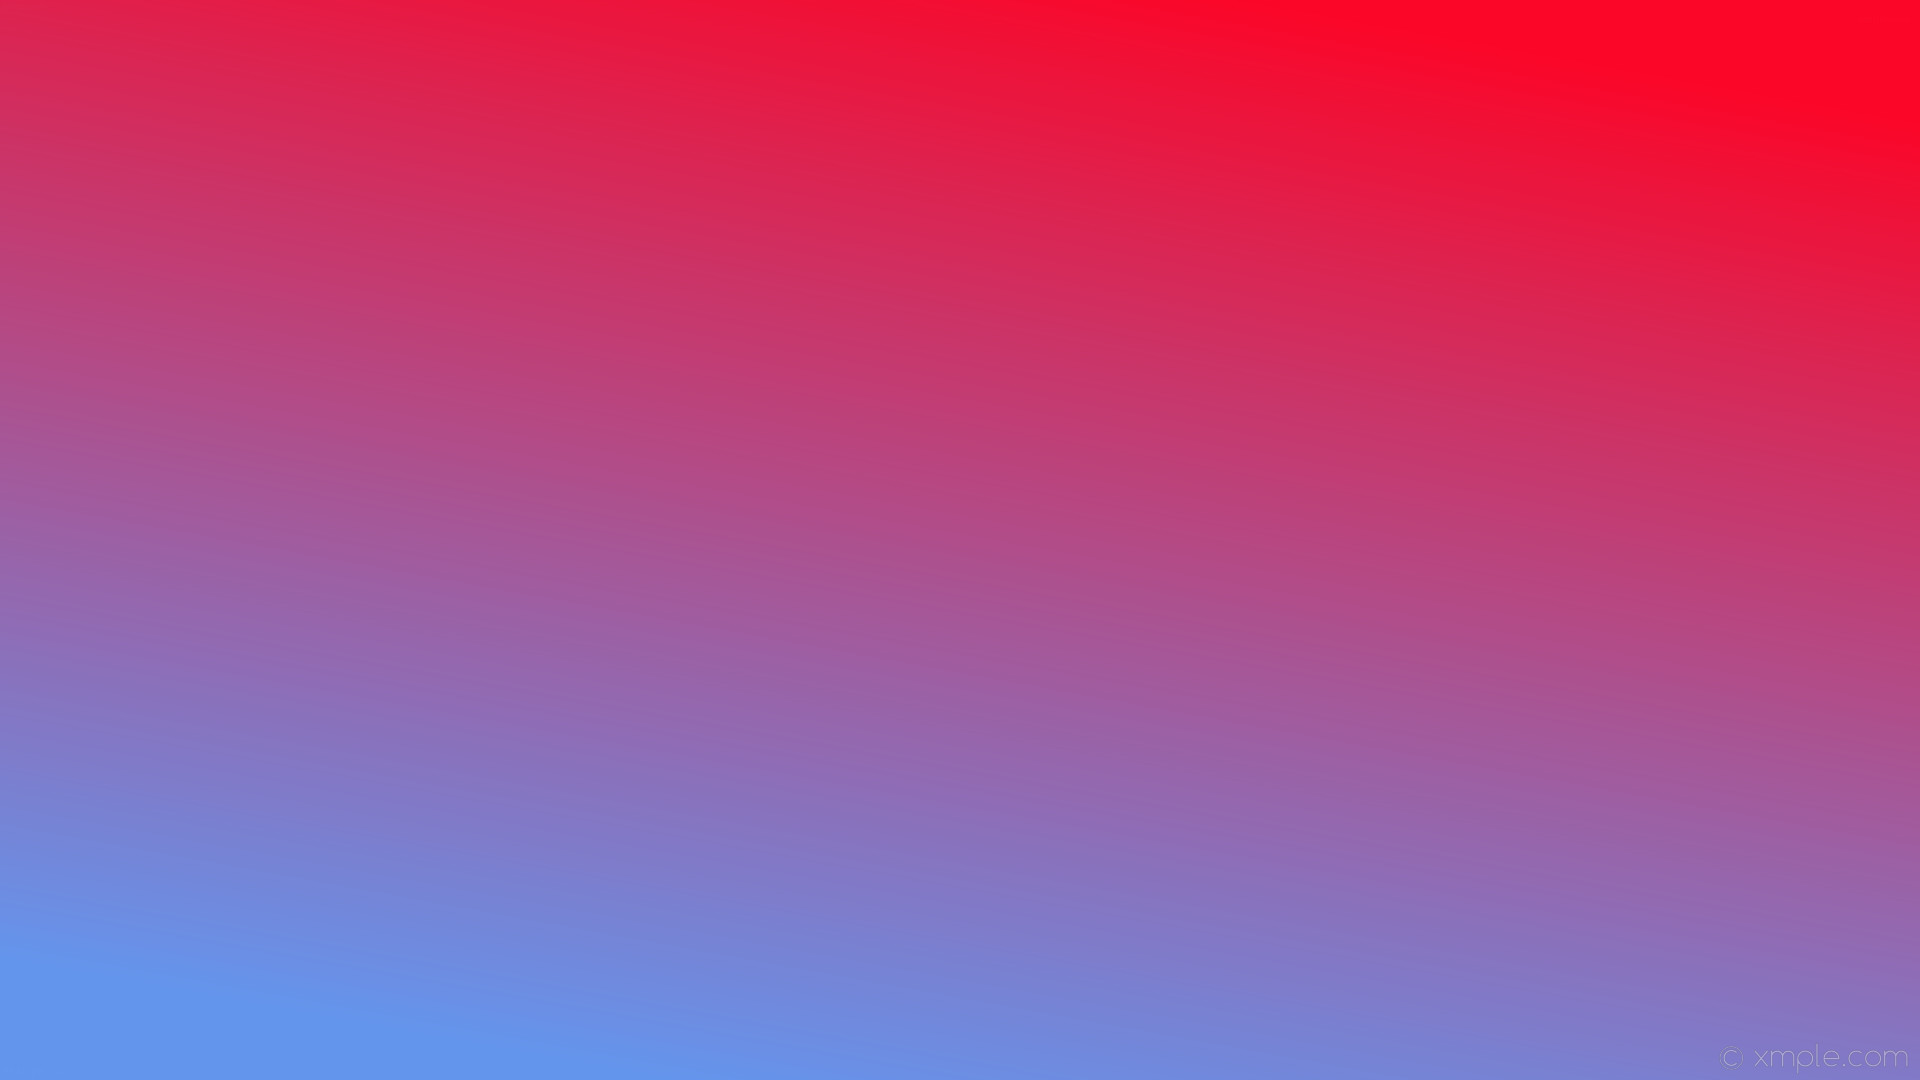 1920x1080 wallpaper gradient red linear blue cornflower blue #fb0628 #6495ed 60Â°